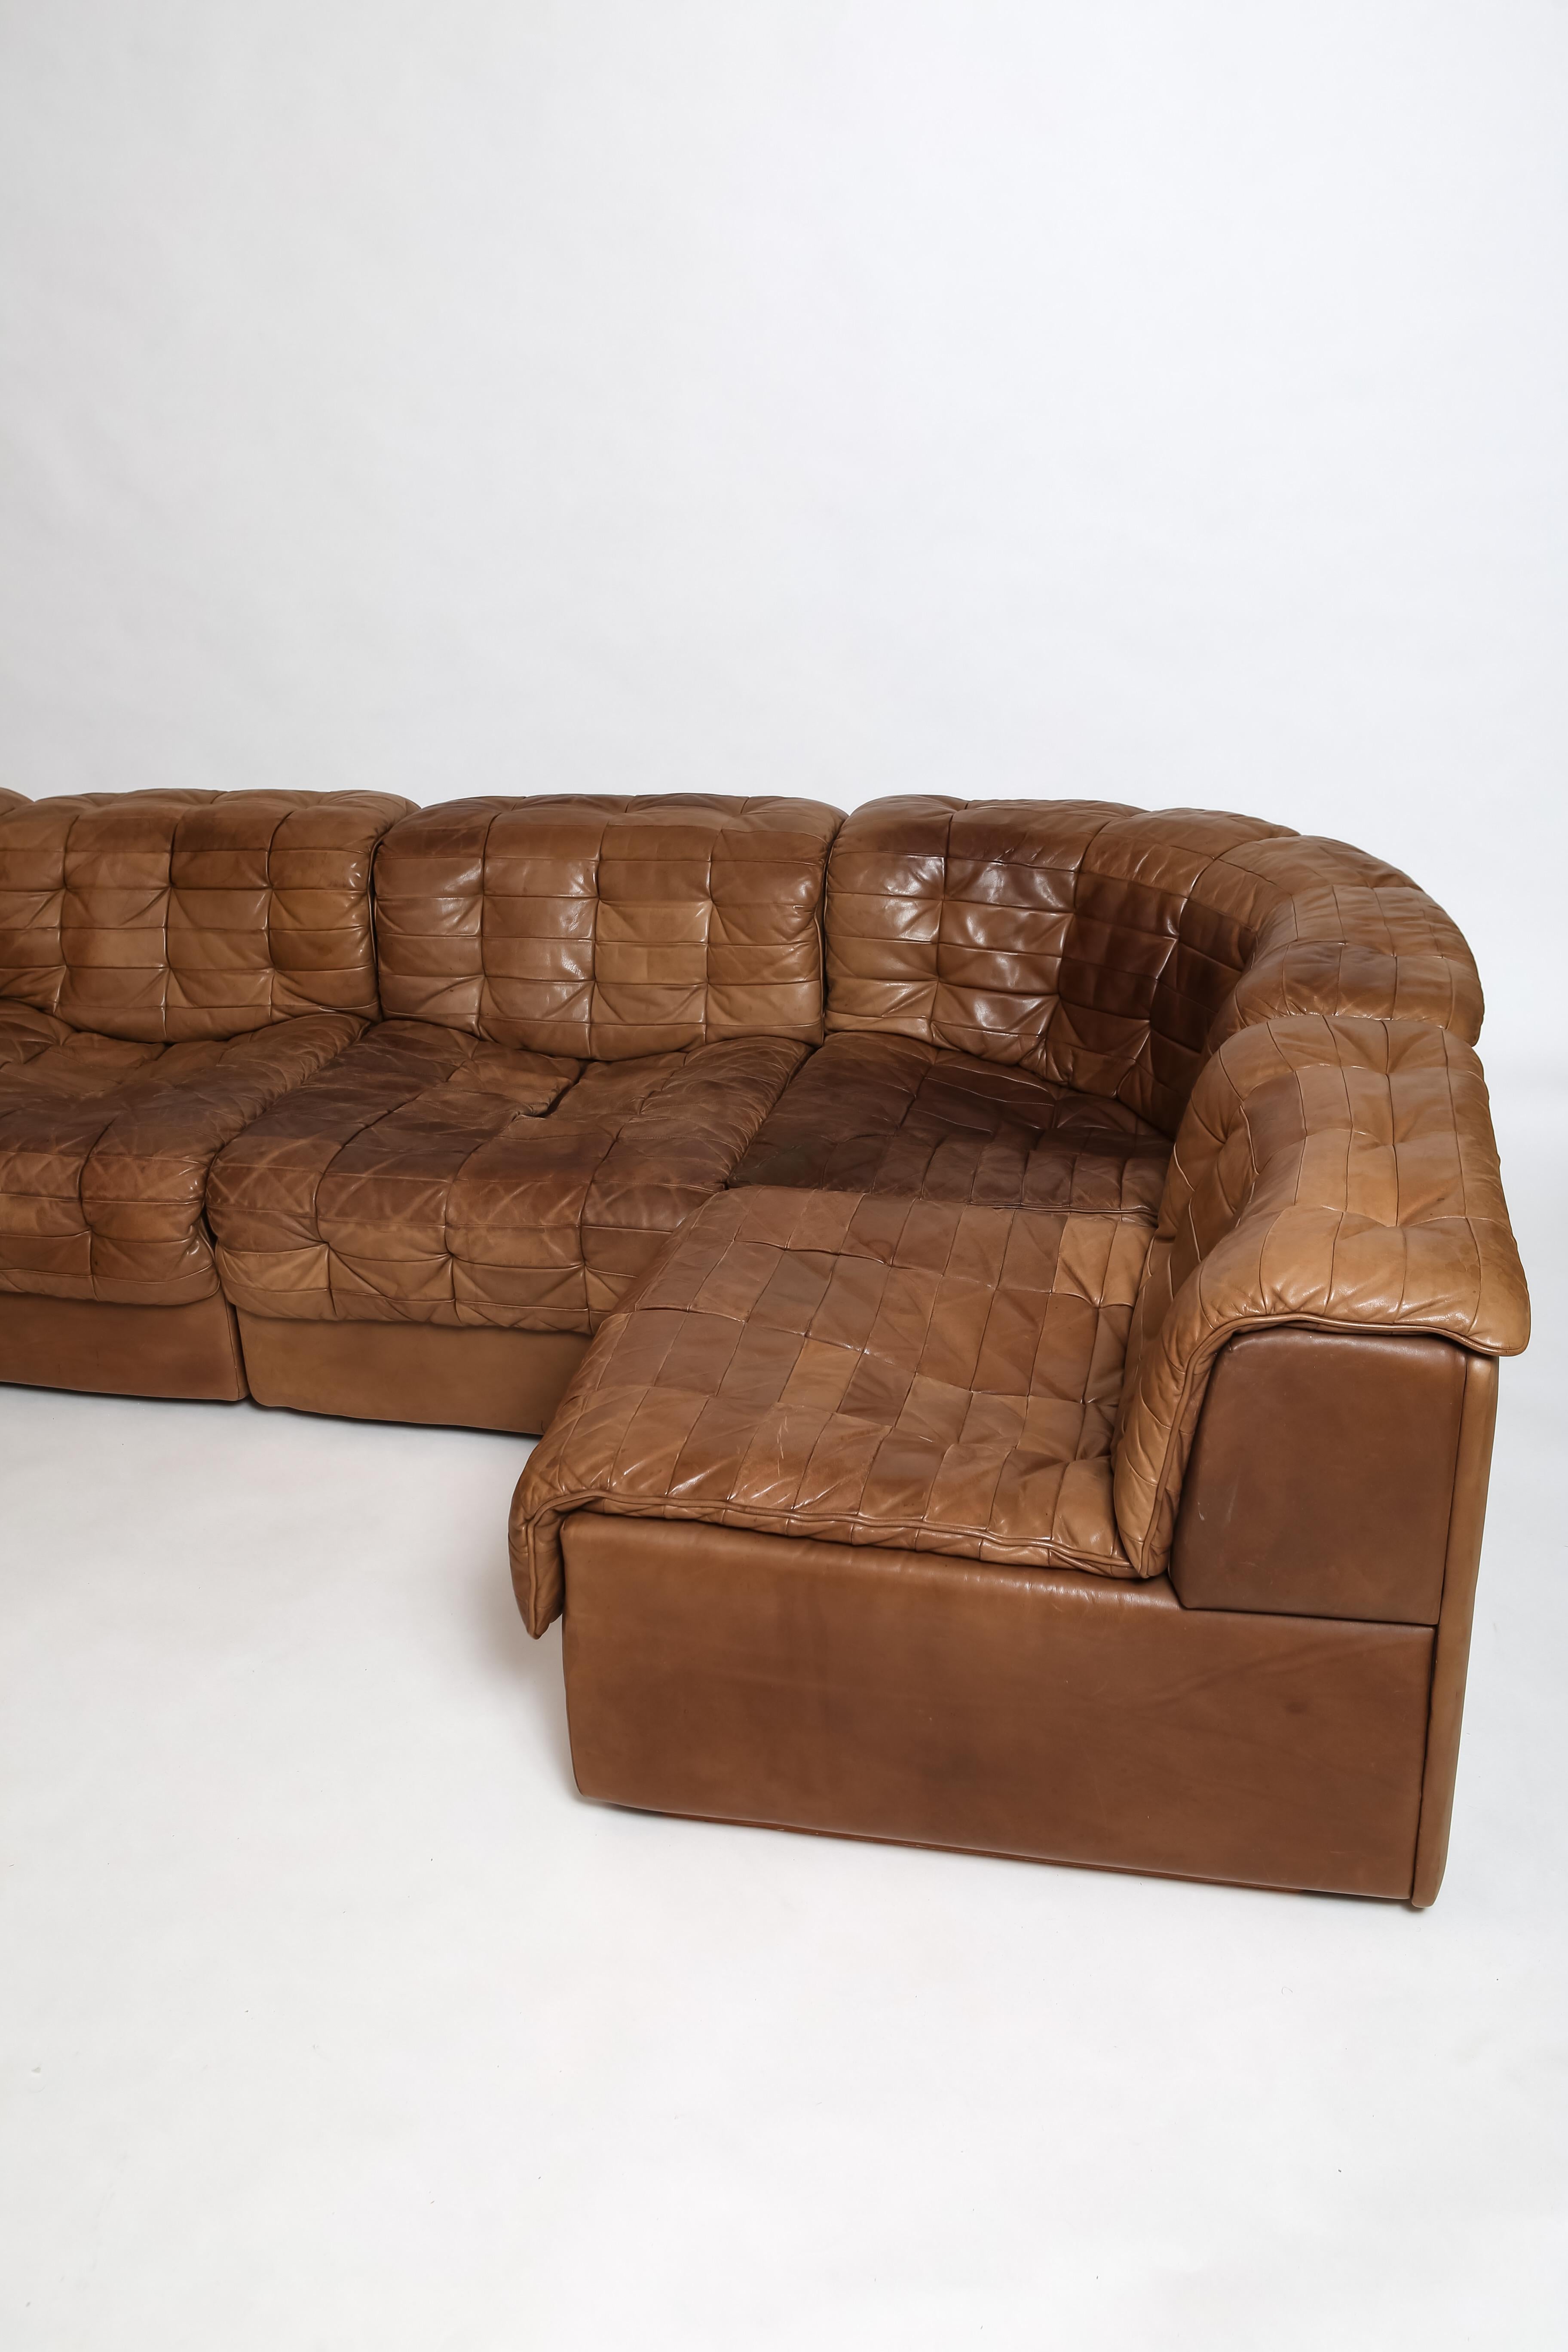 Mid-Century Modern DS 11 Modular Leather Sofa by DeSede Switzerland 1970s